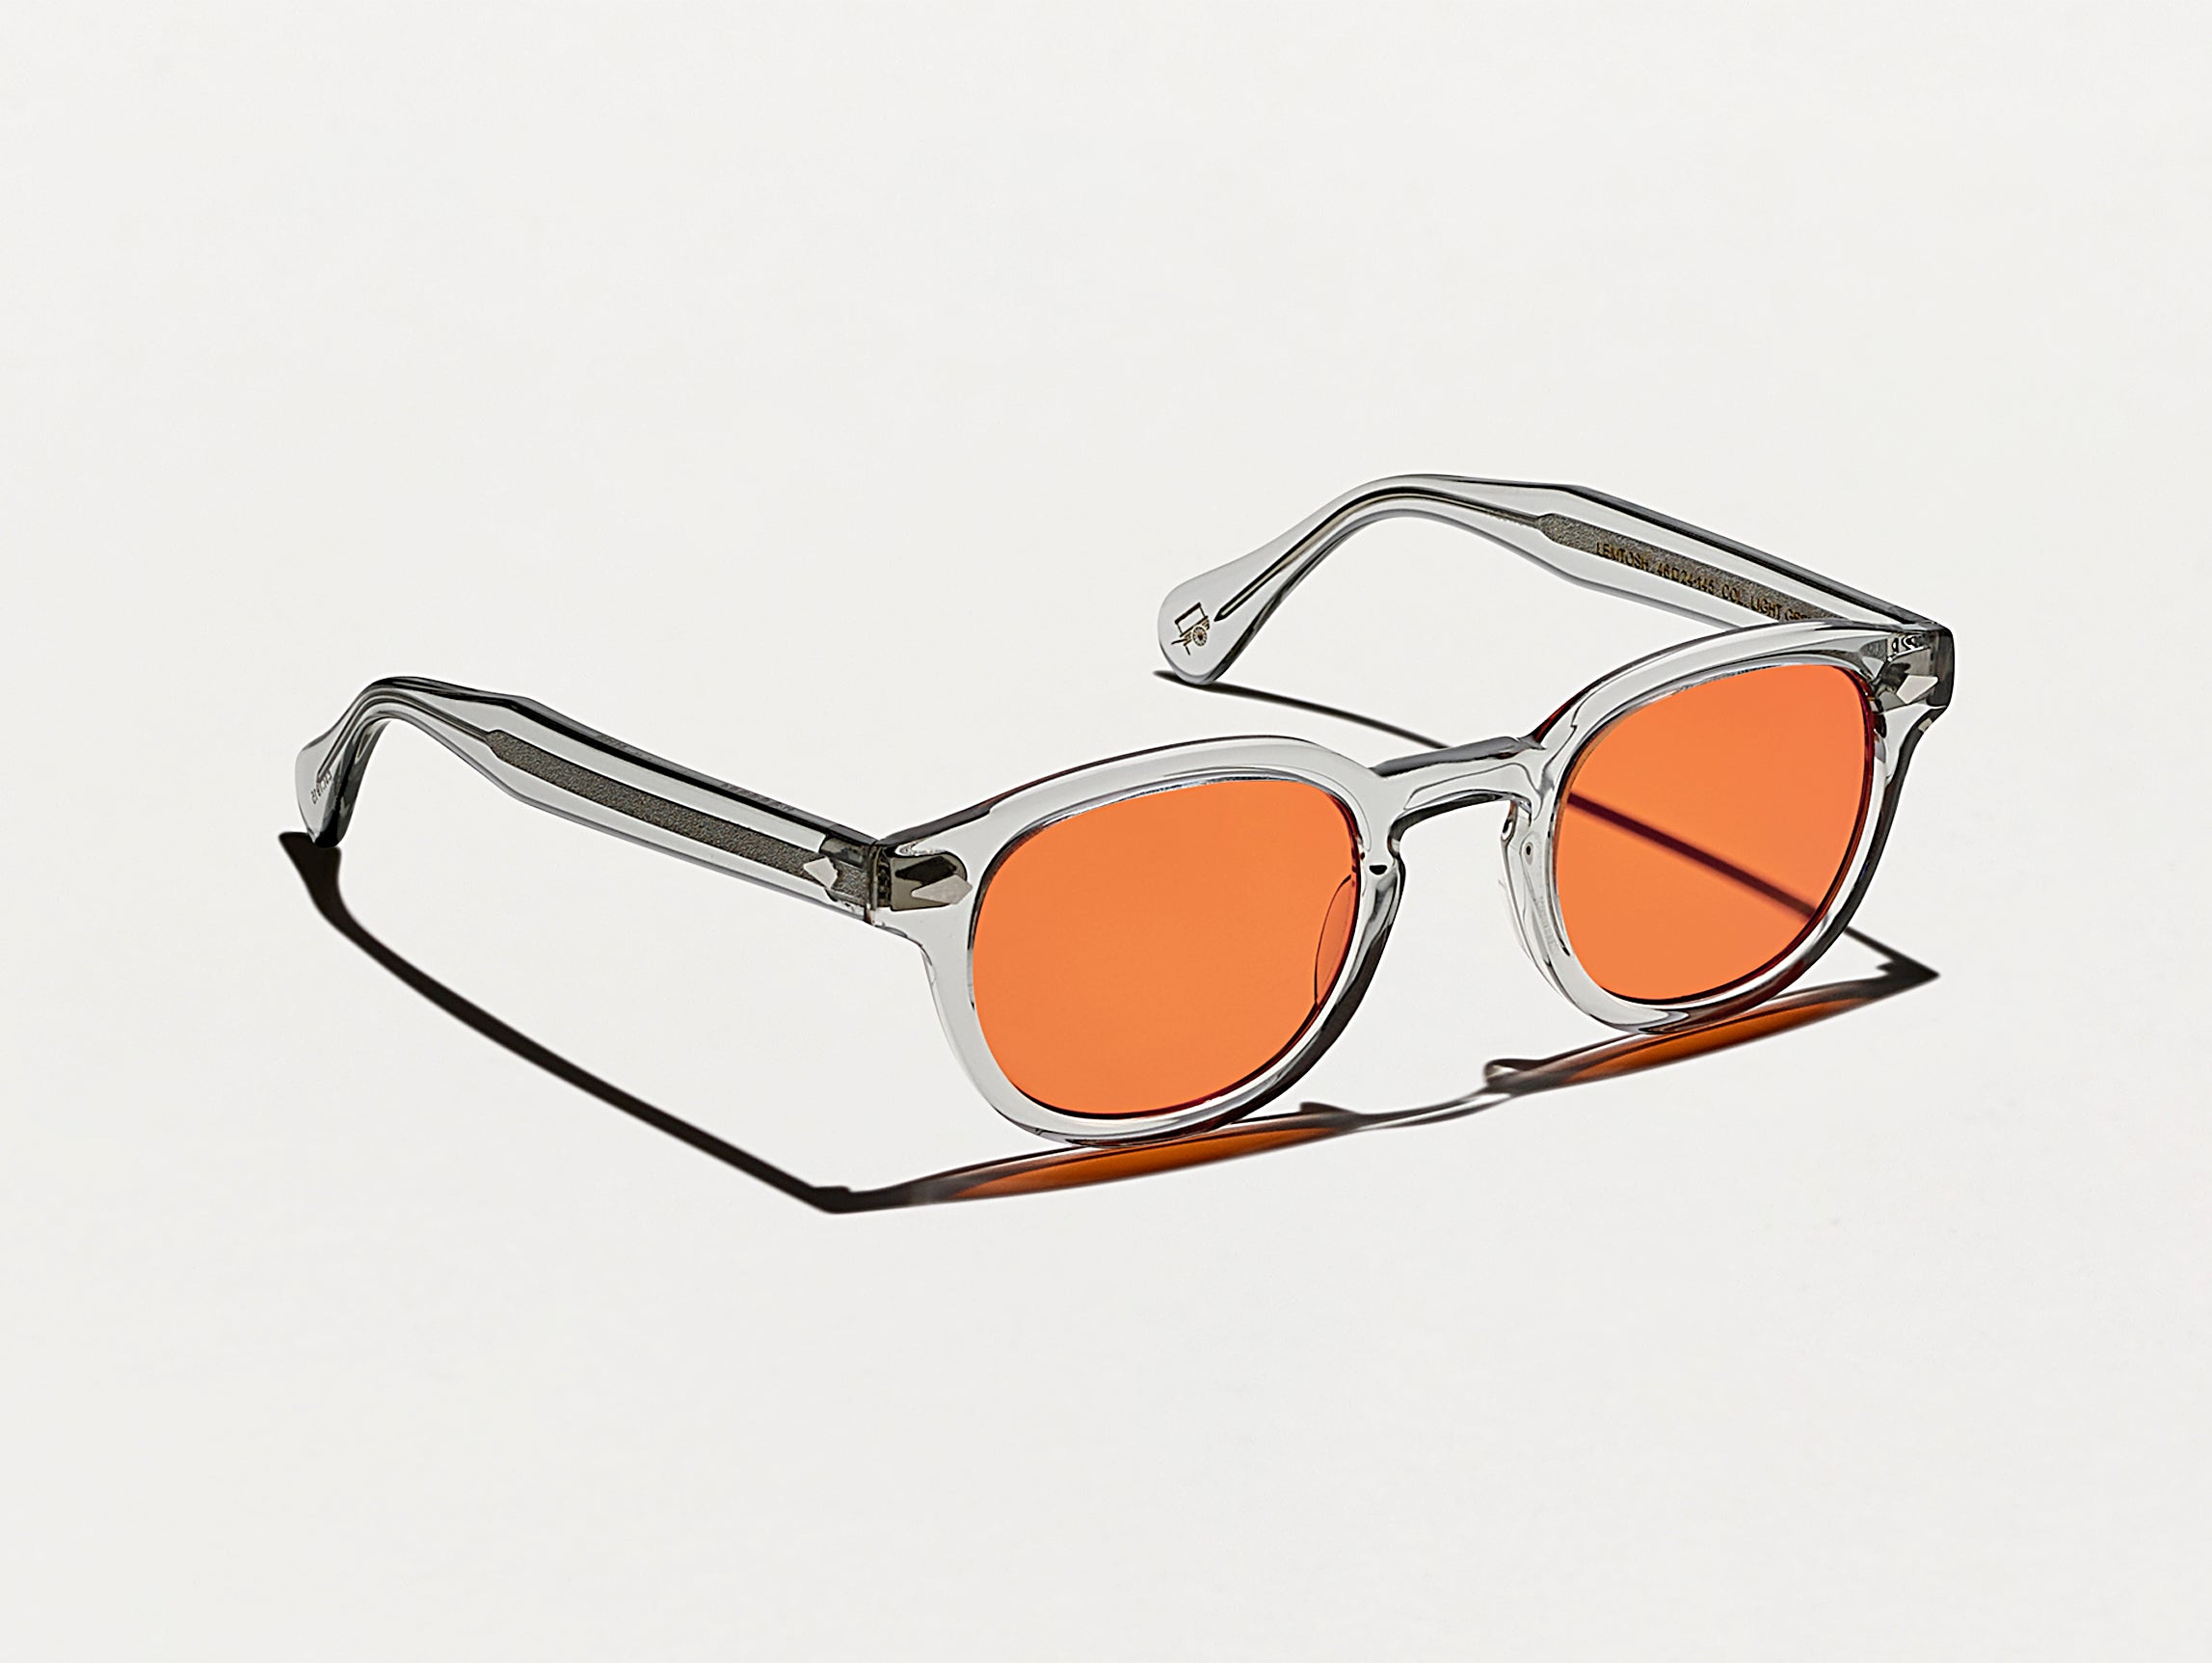 The LEMTOSH Light Grey with Woodstock Orange Tinted Lenses